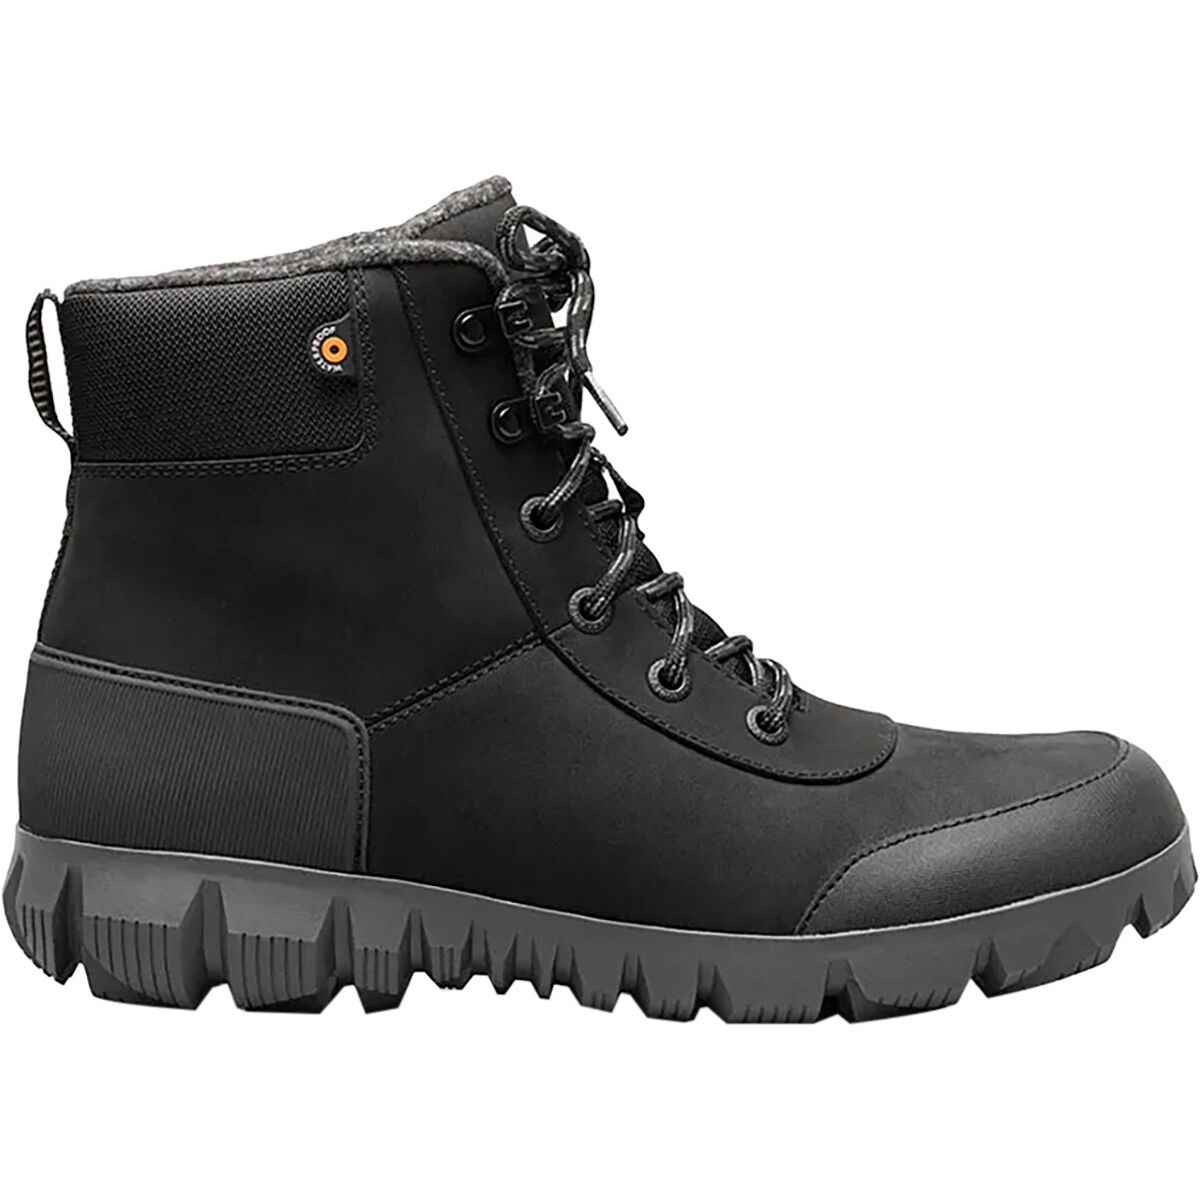 Bogs Arcata Urban Leather Mid Boot - Men's